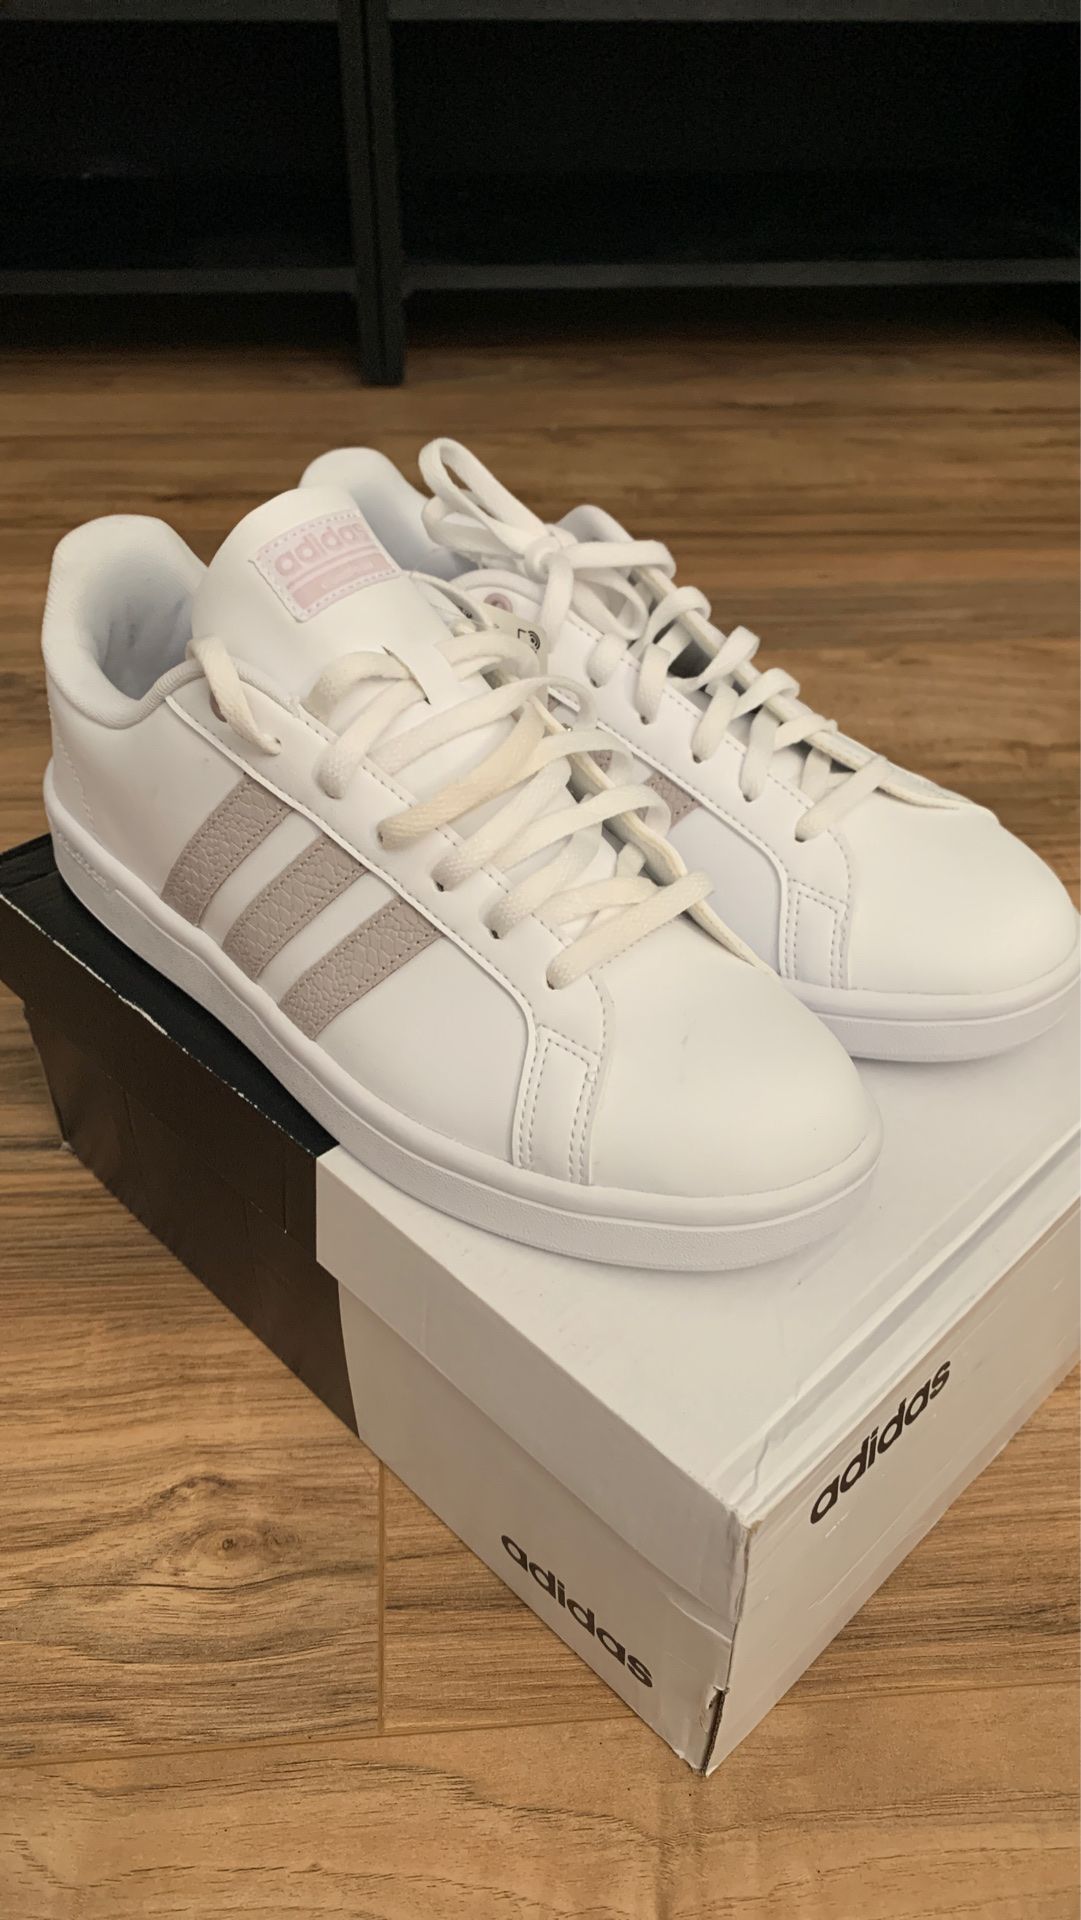 Woman’s White Adidas Shoe Beige Stripes Sz 10 Brand New NWT